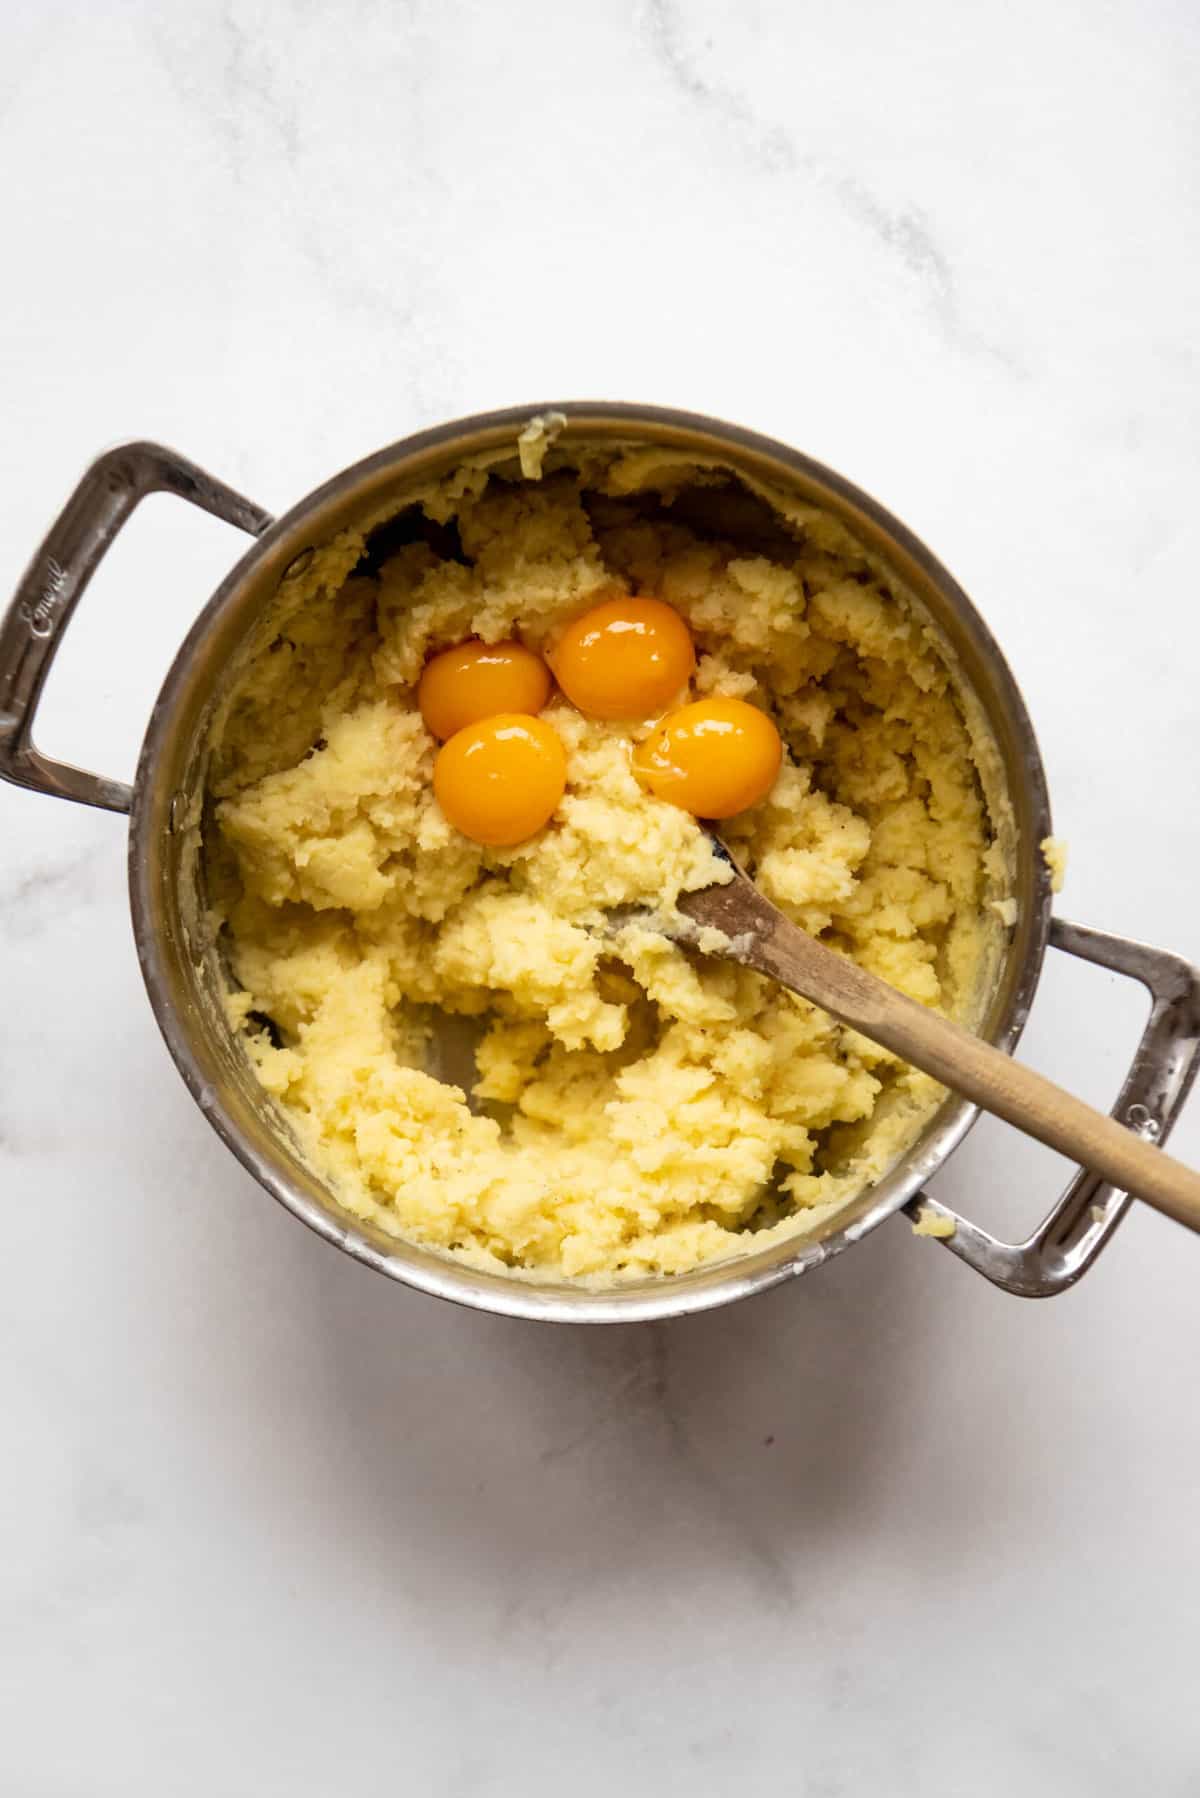 Adding egg yolks to creamy mashed potatoes to make Duchess potatoes.